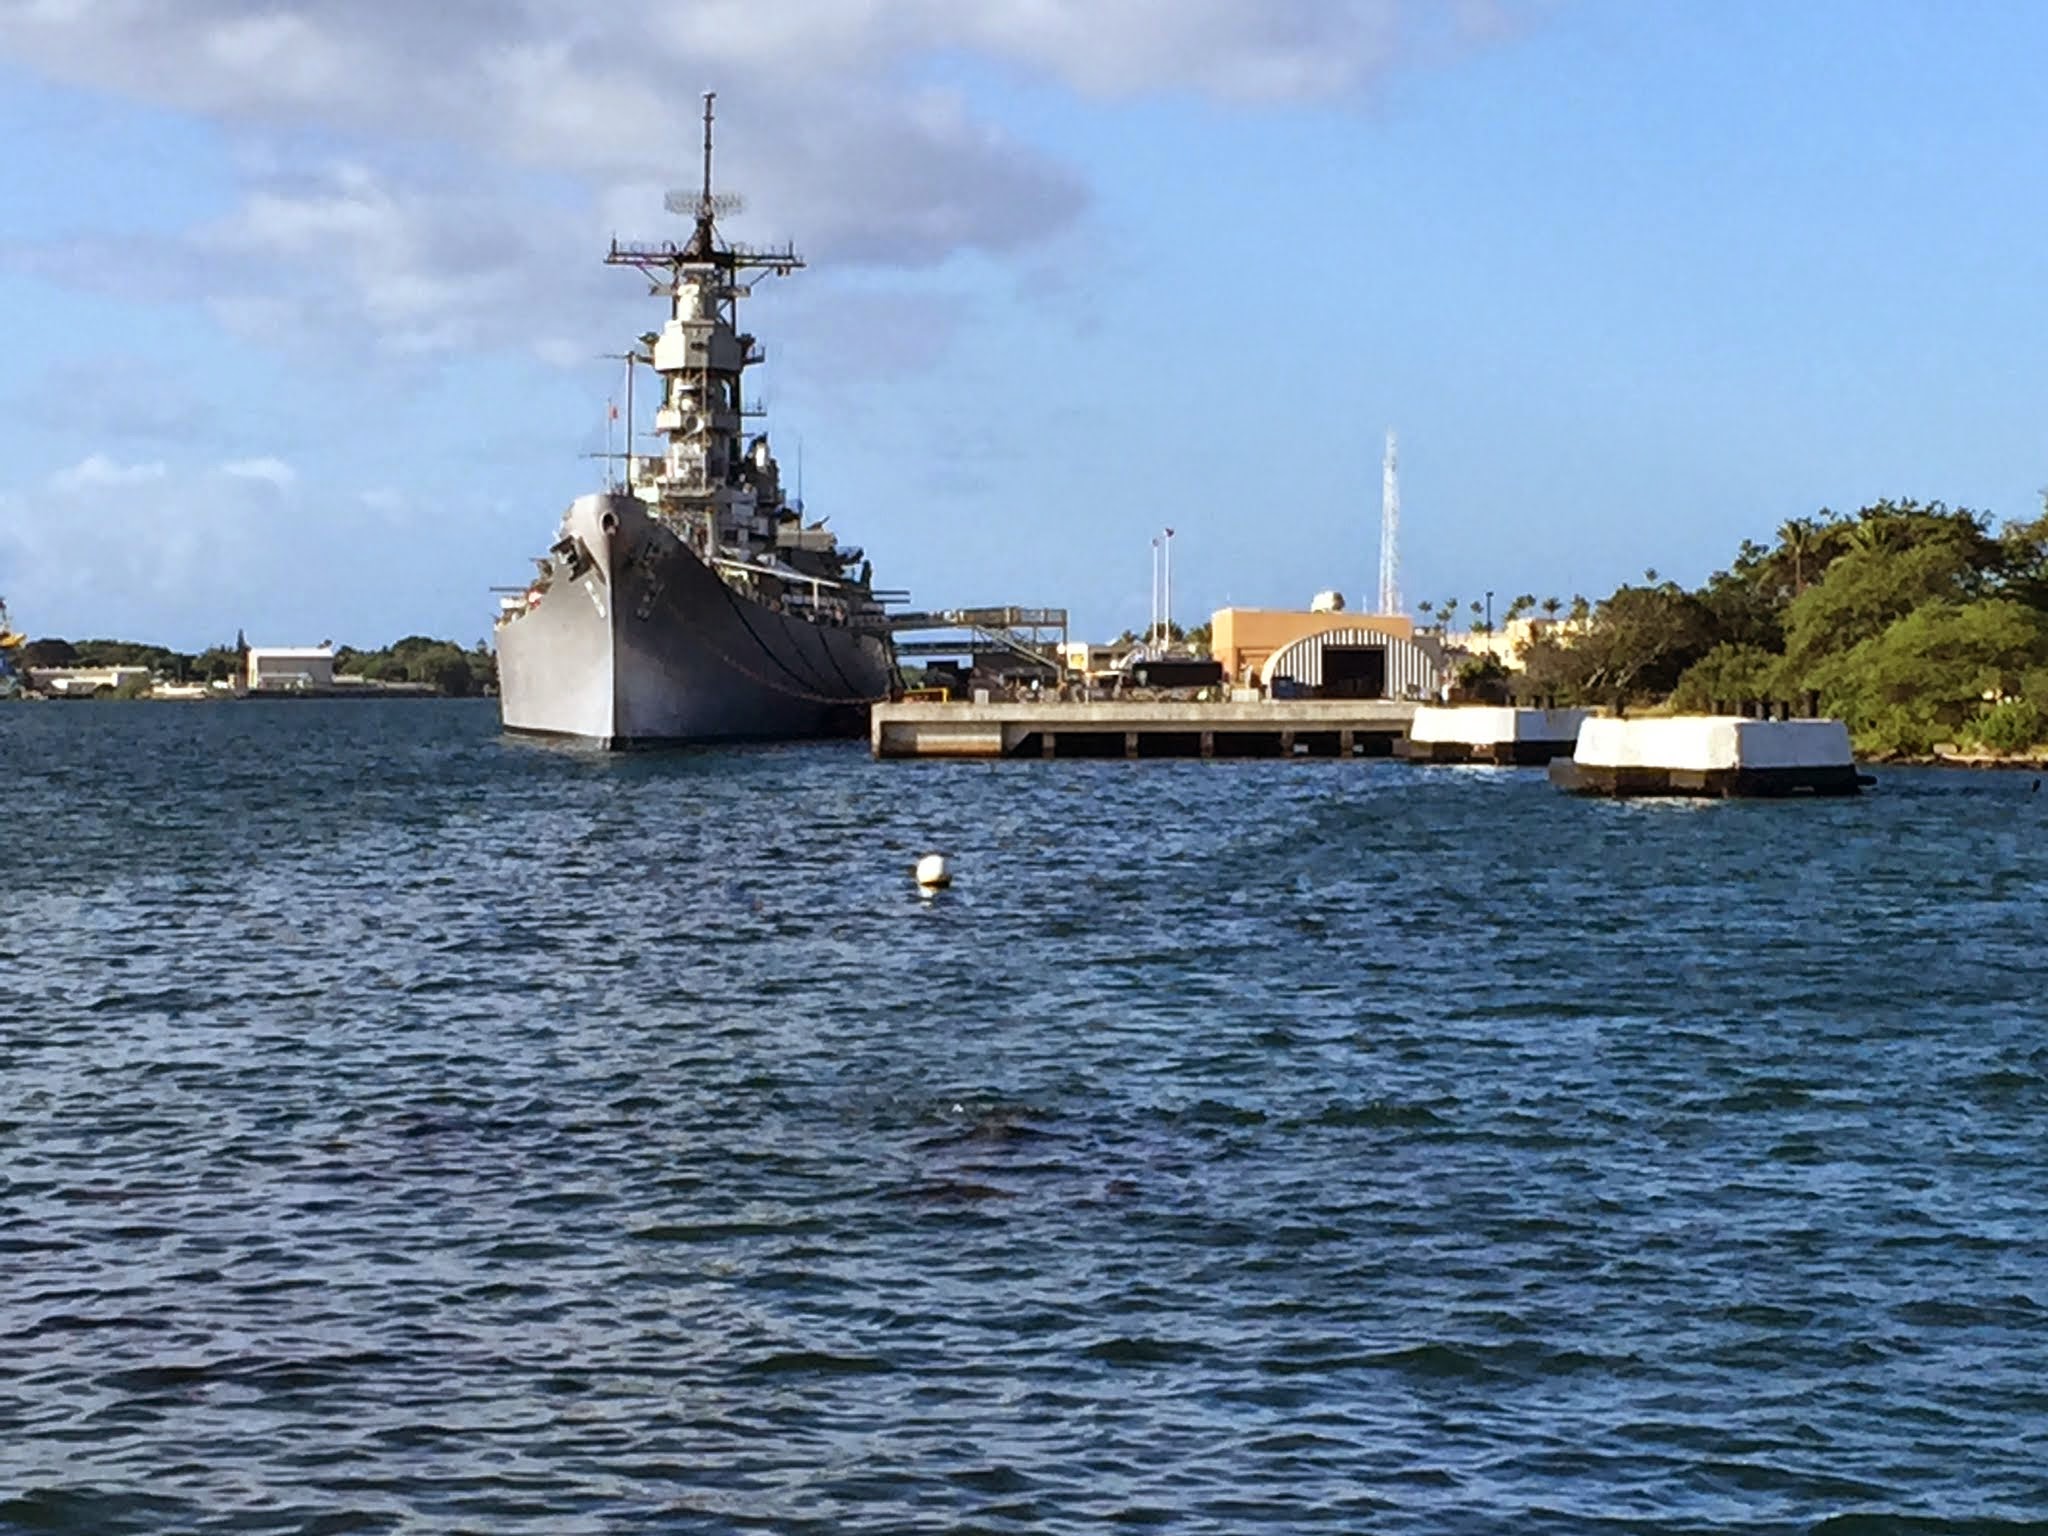 Museum ship Missouri, Pearl Harbor, Hawaii, United States, 30 Nov 2014